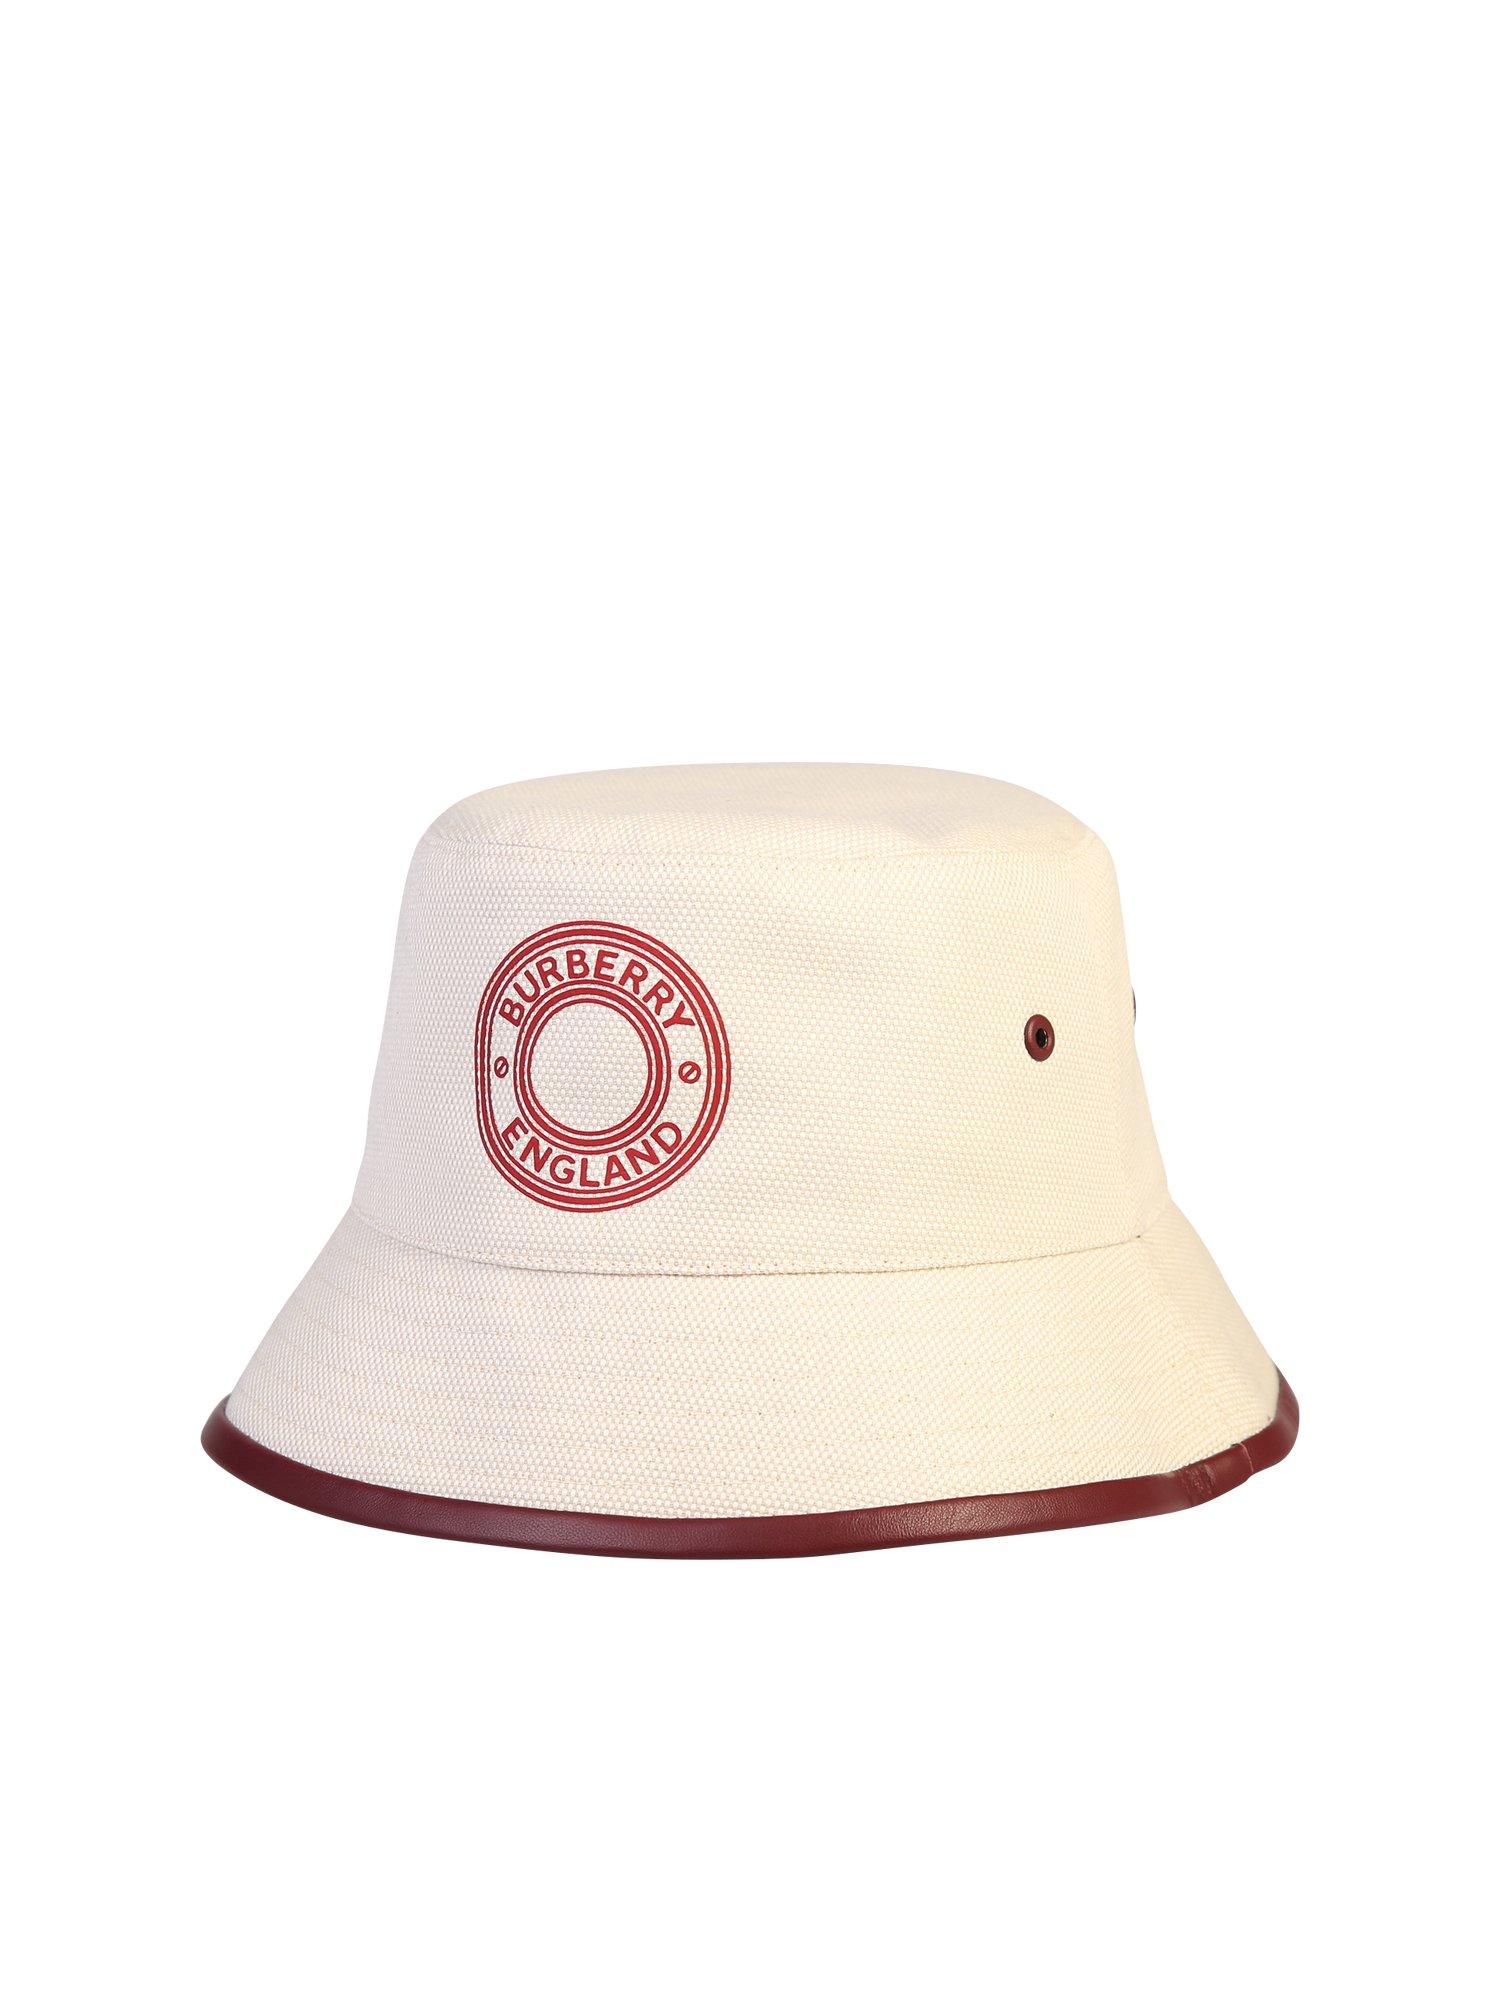 Burberry Cotton Logo Print Bucket Hat for Men - Lyst